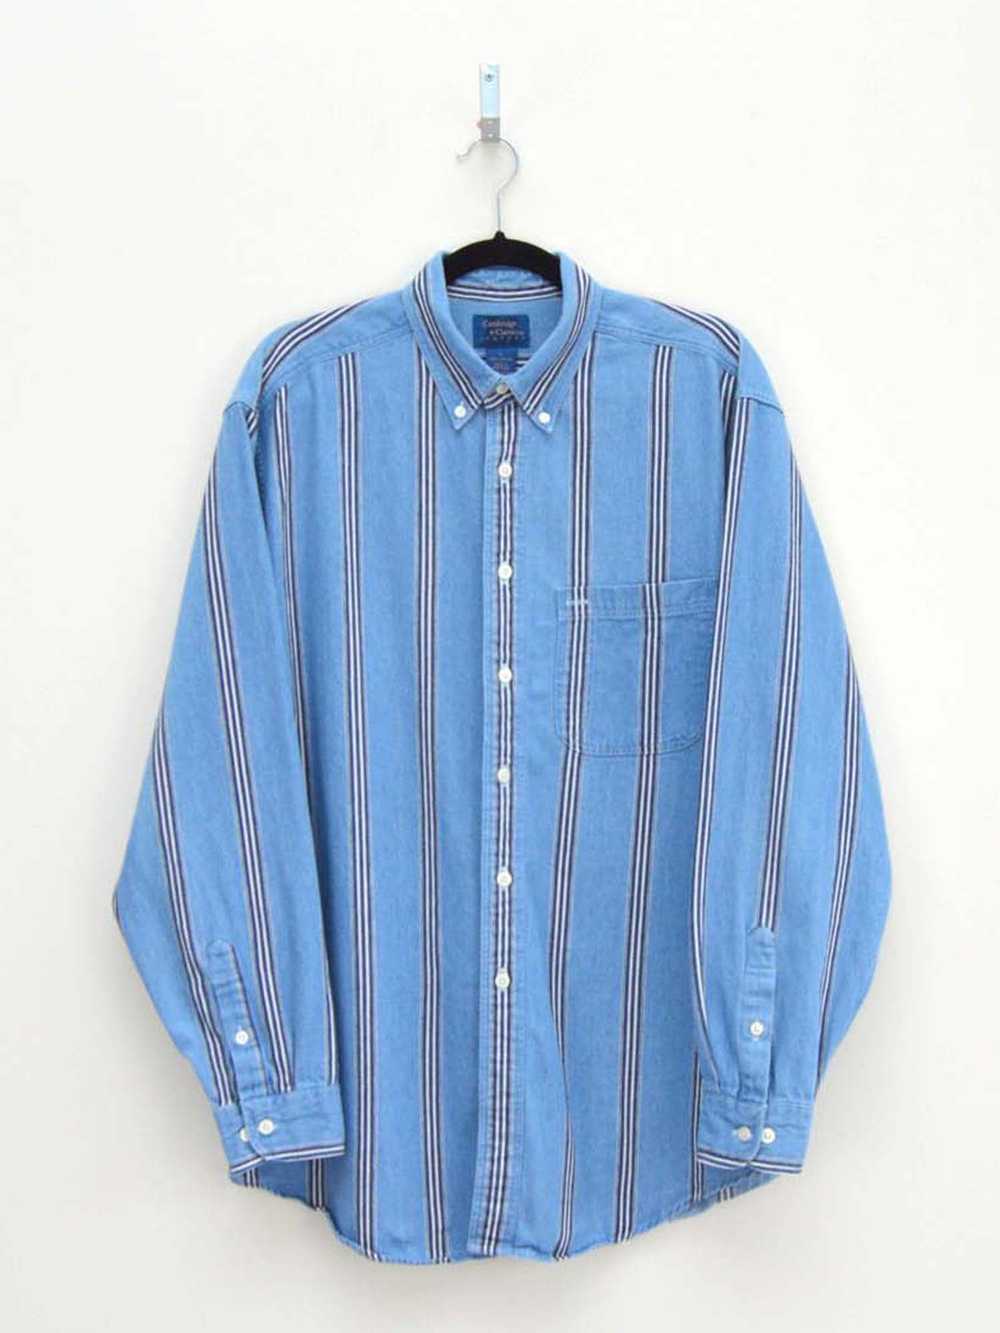 Vintage White & Blue Striped Shirt (L) - image 1